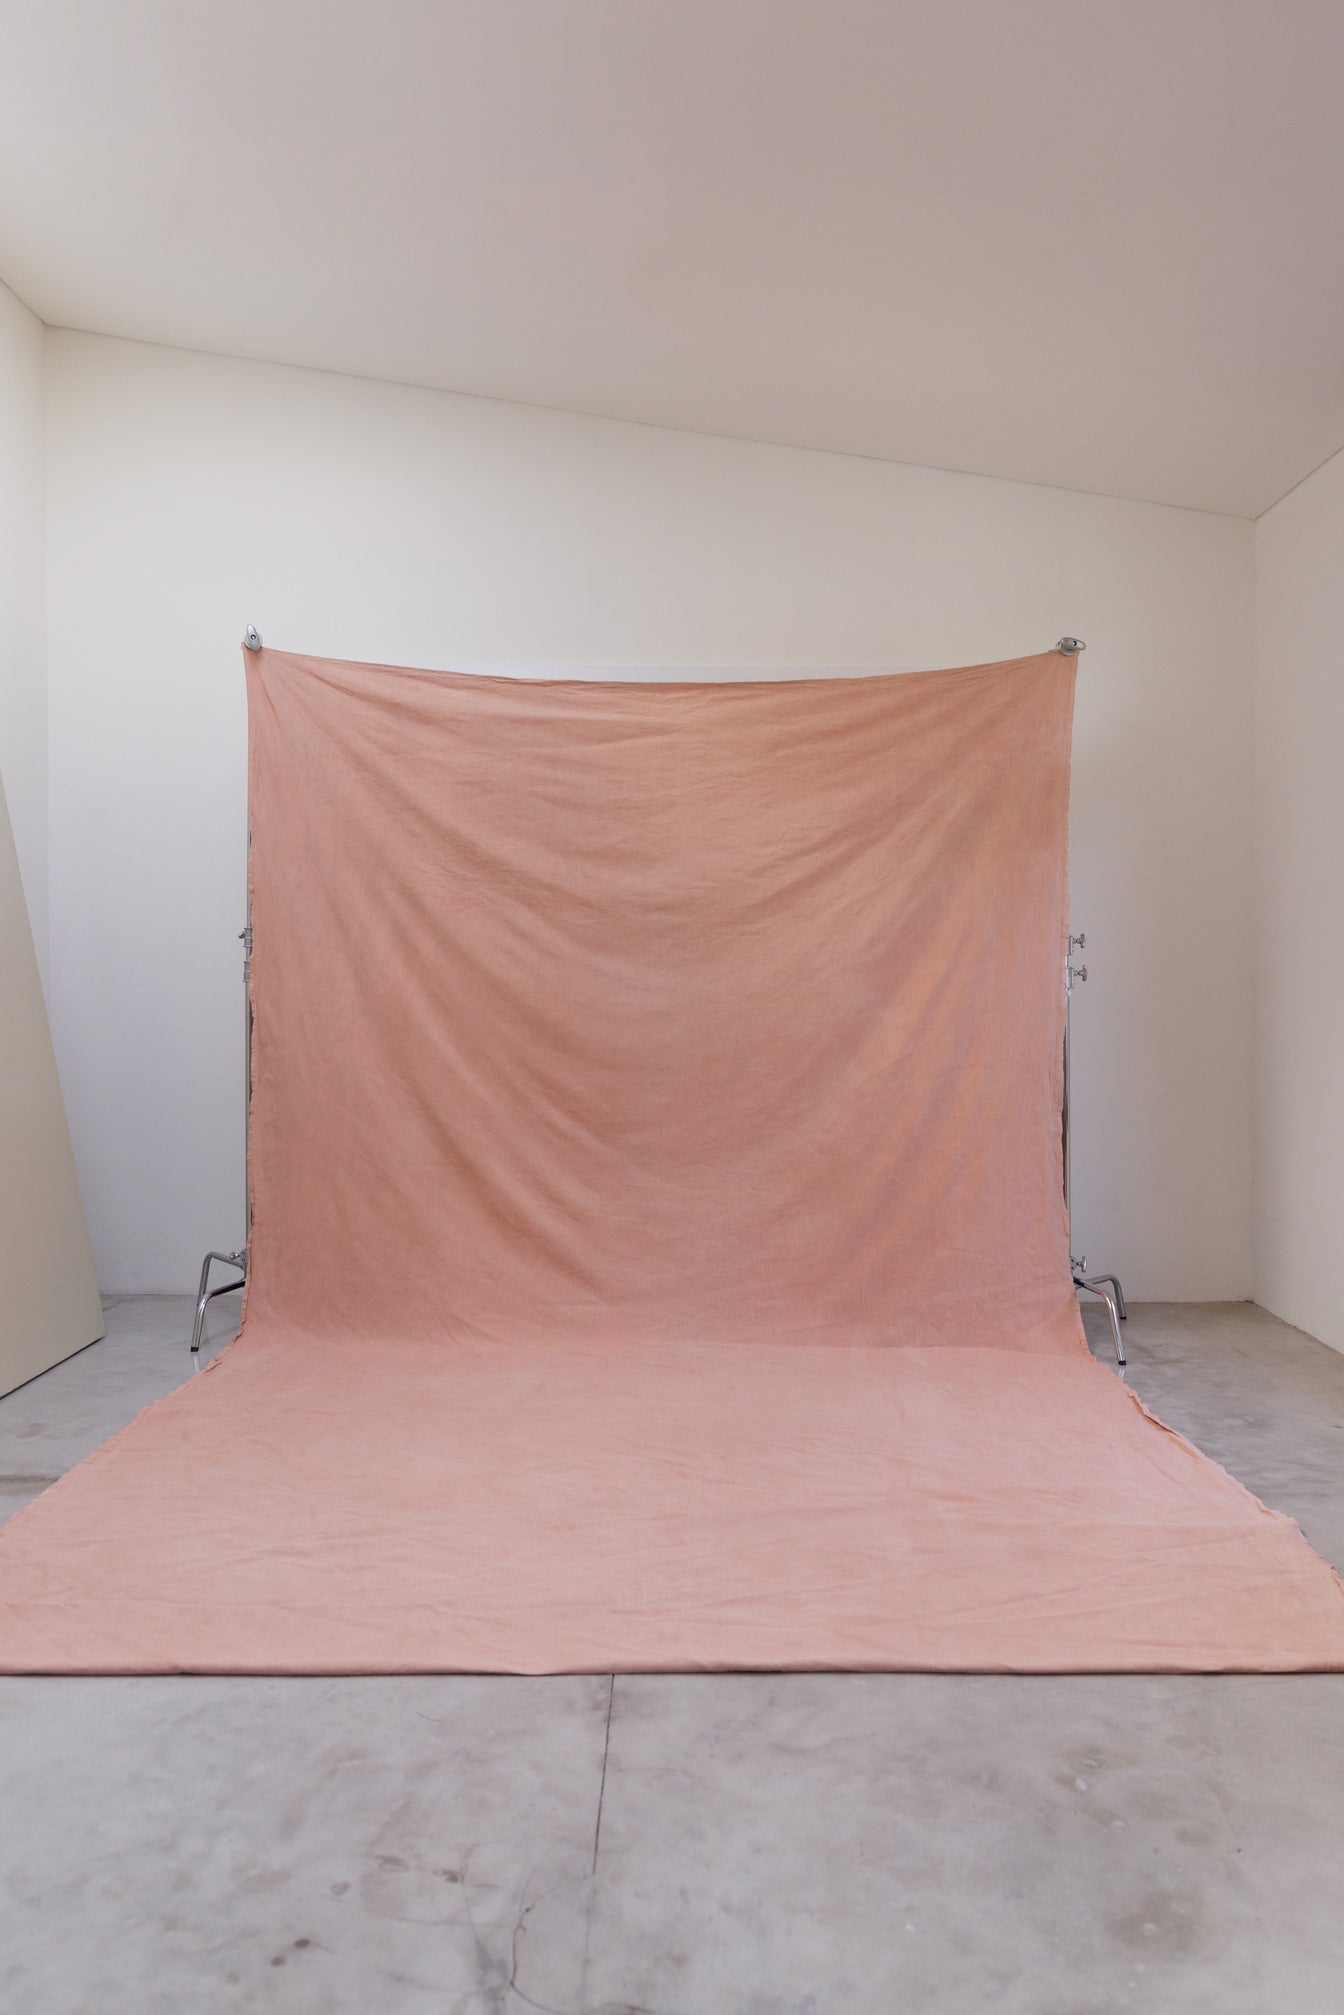 [3x6m] Canvas Backdrop Pale Pink